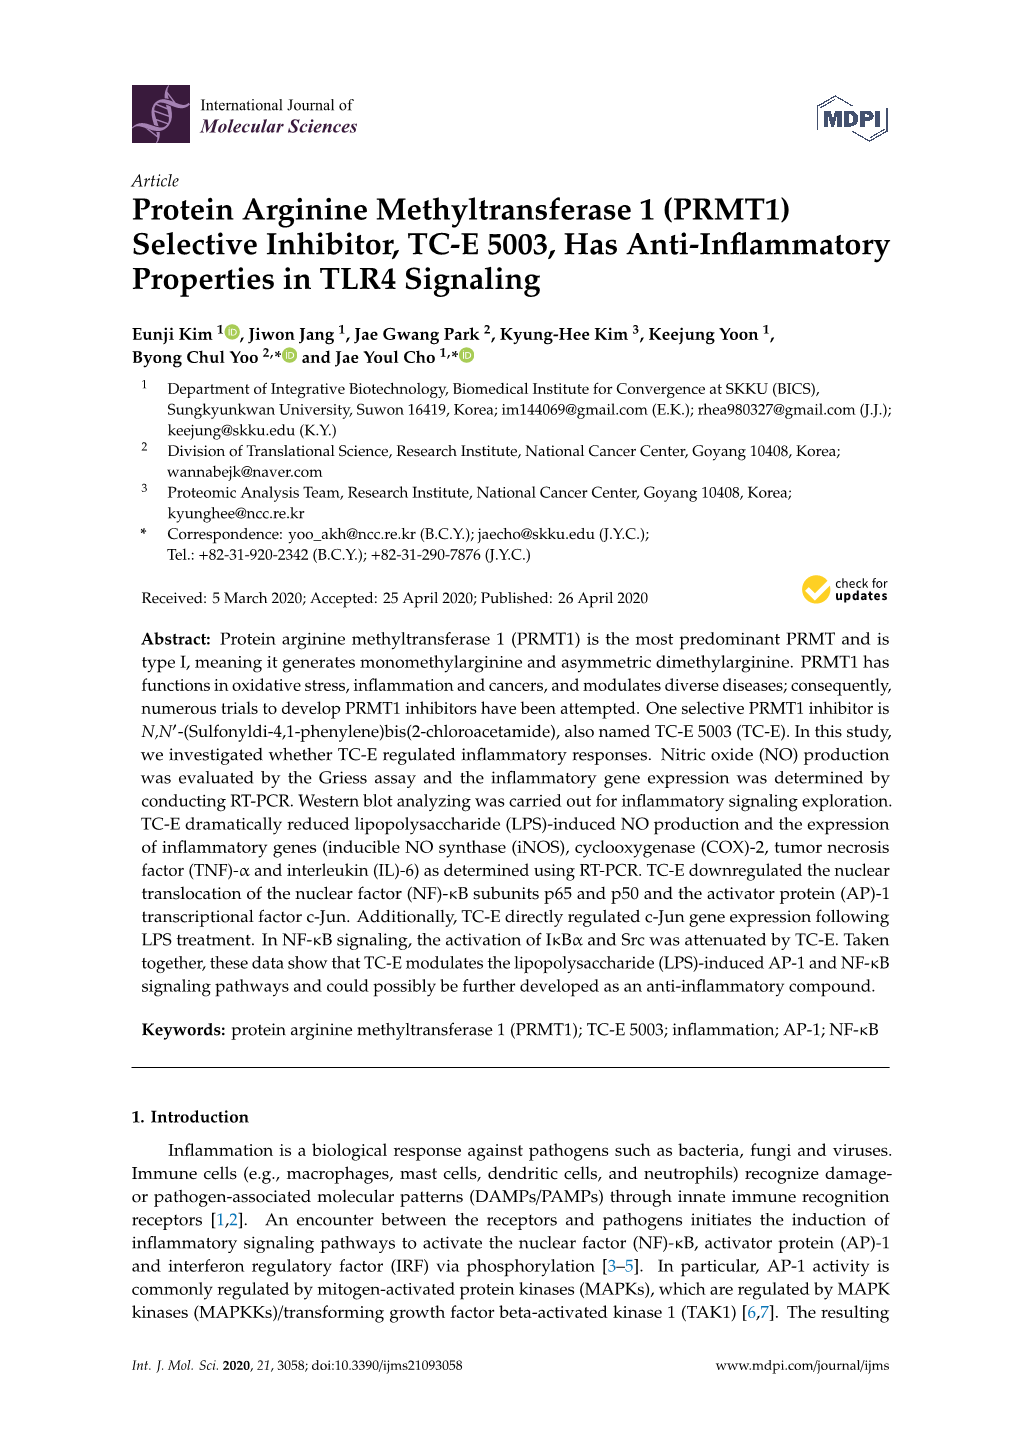 Protein Arginine Methyltransferase 1 (PRMT1) Selective Inhibitor, TC-E 5003, Has Anti-Inflammatory Properties in TLR4 Signaling